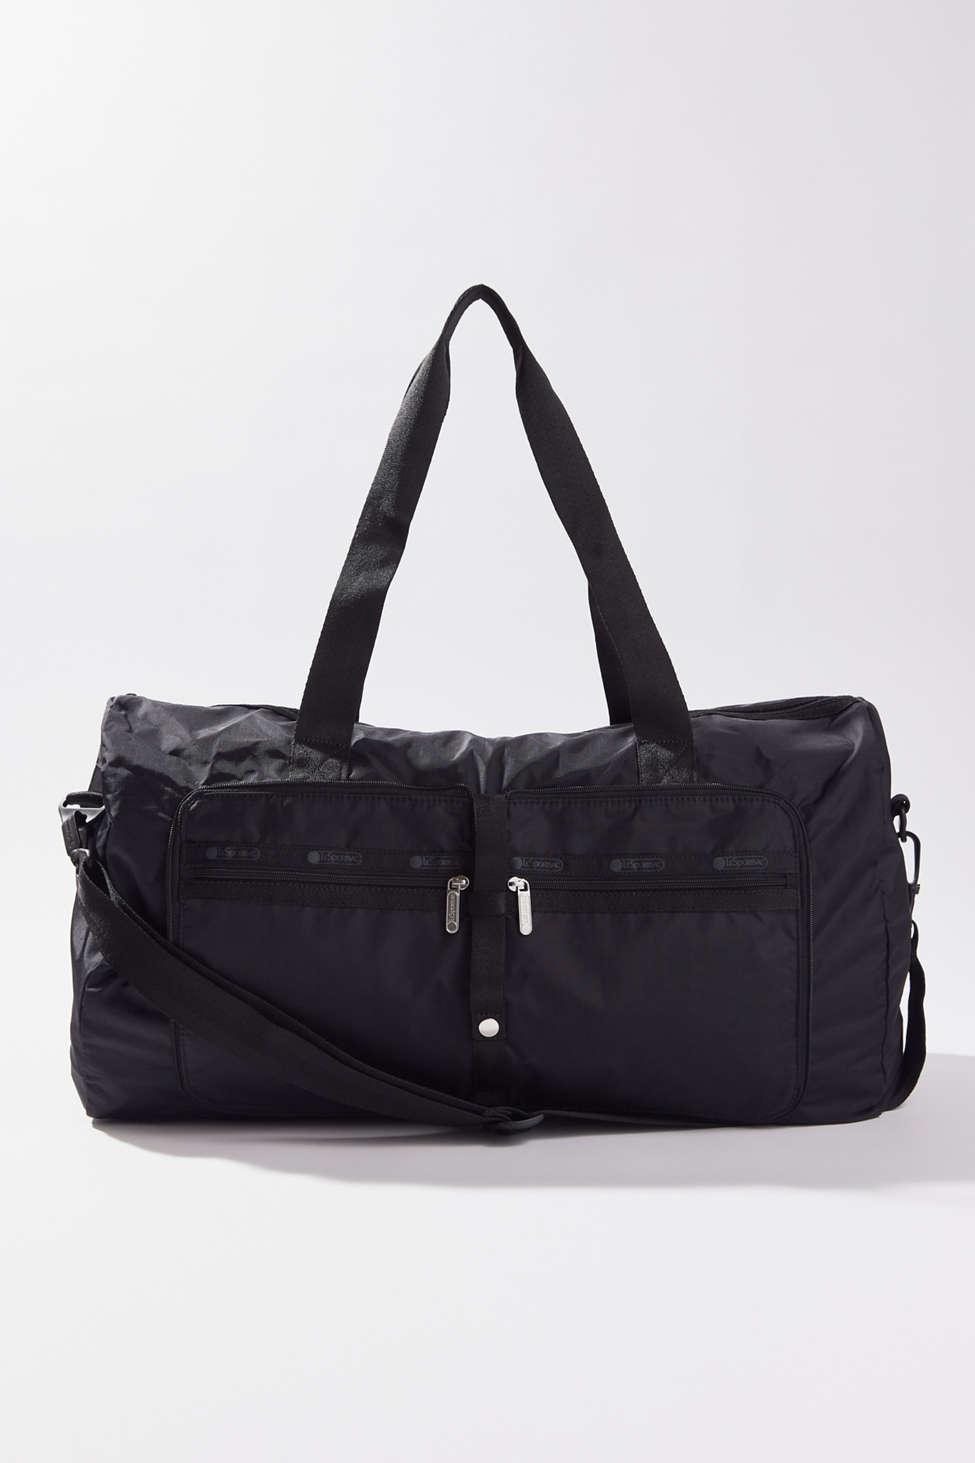 Urban Outfitters LeSportsac Gabrielle Crossbody Bag